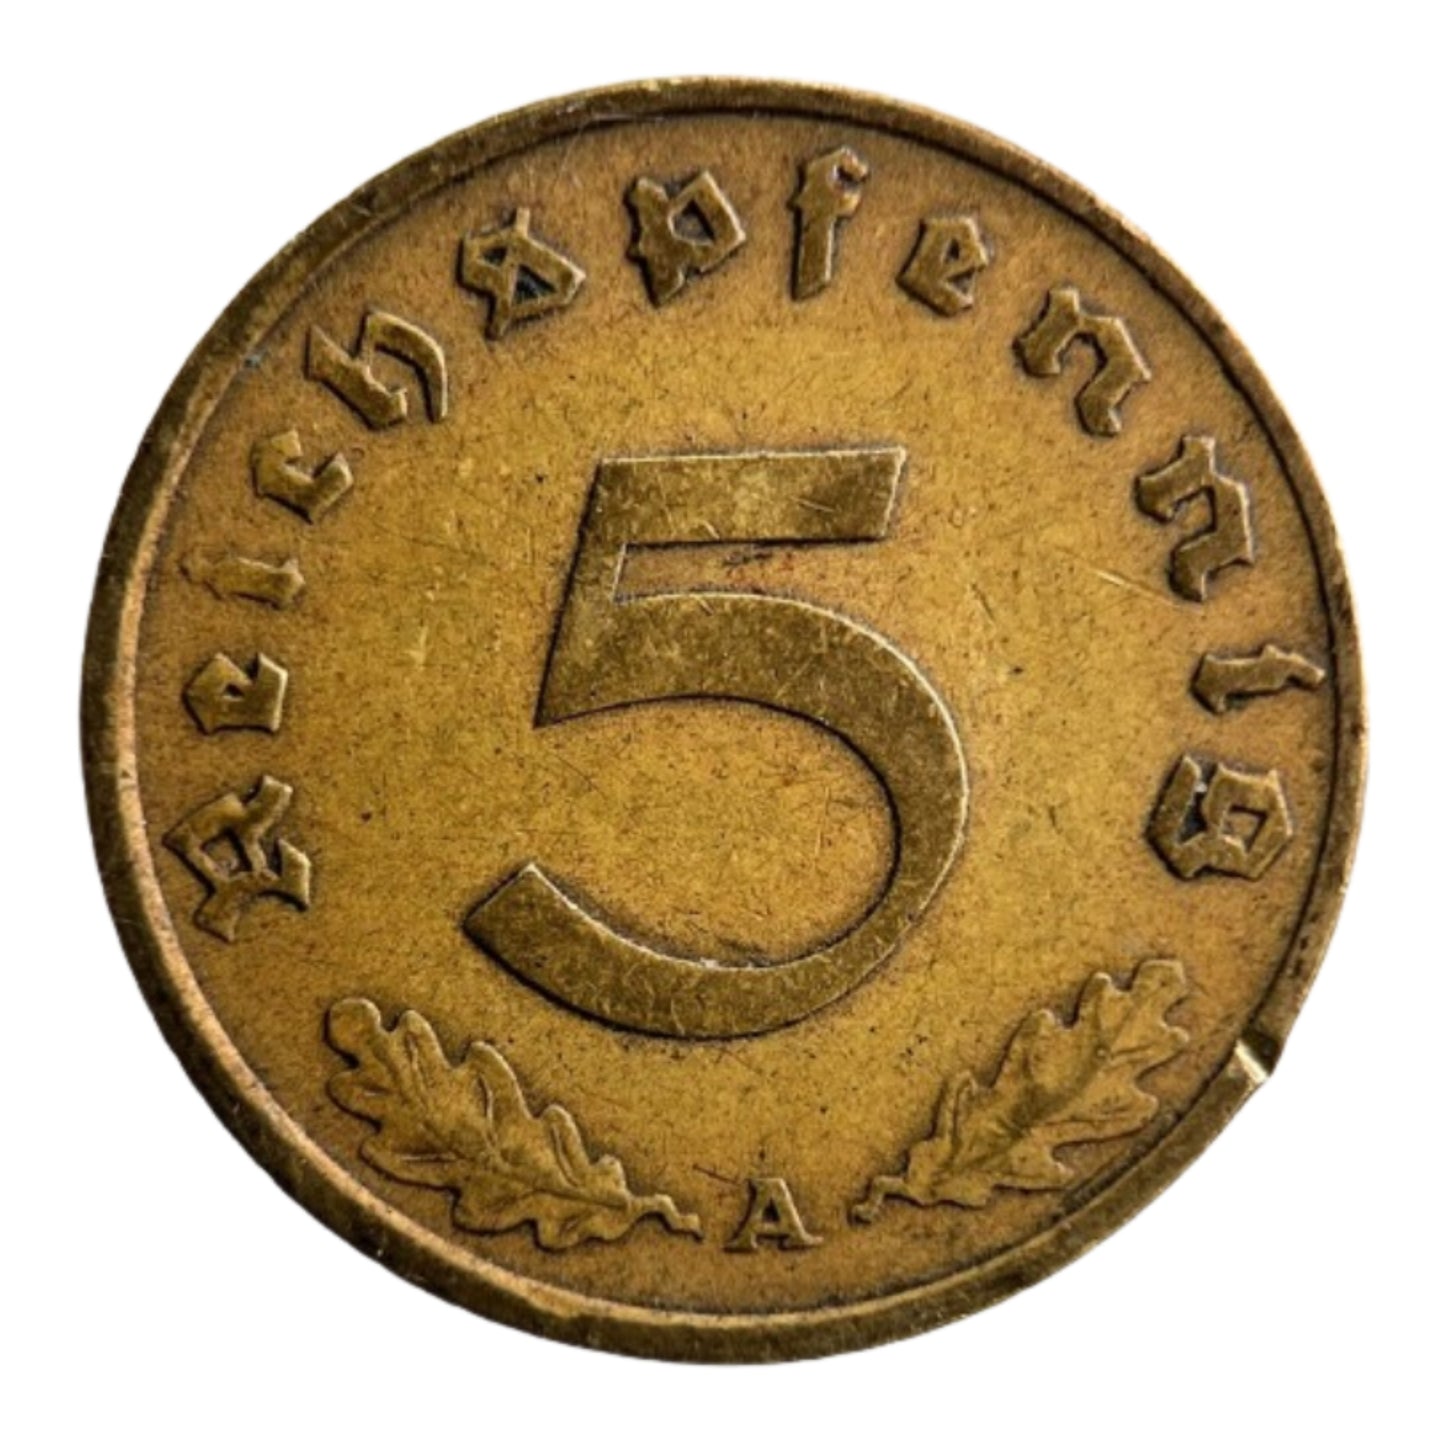 5 Pfennig, 1937